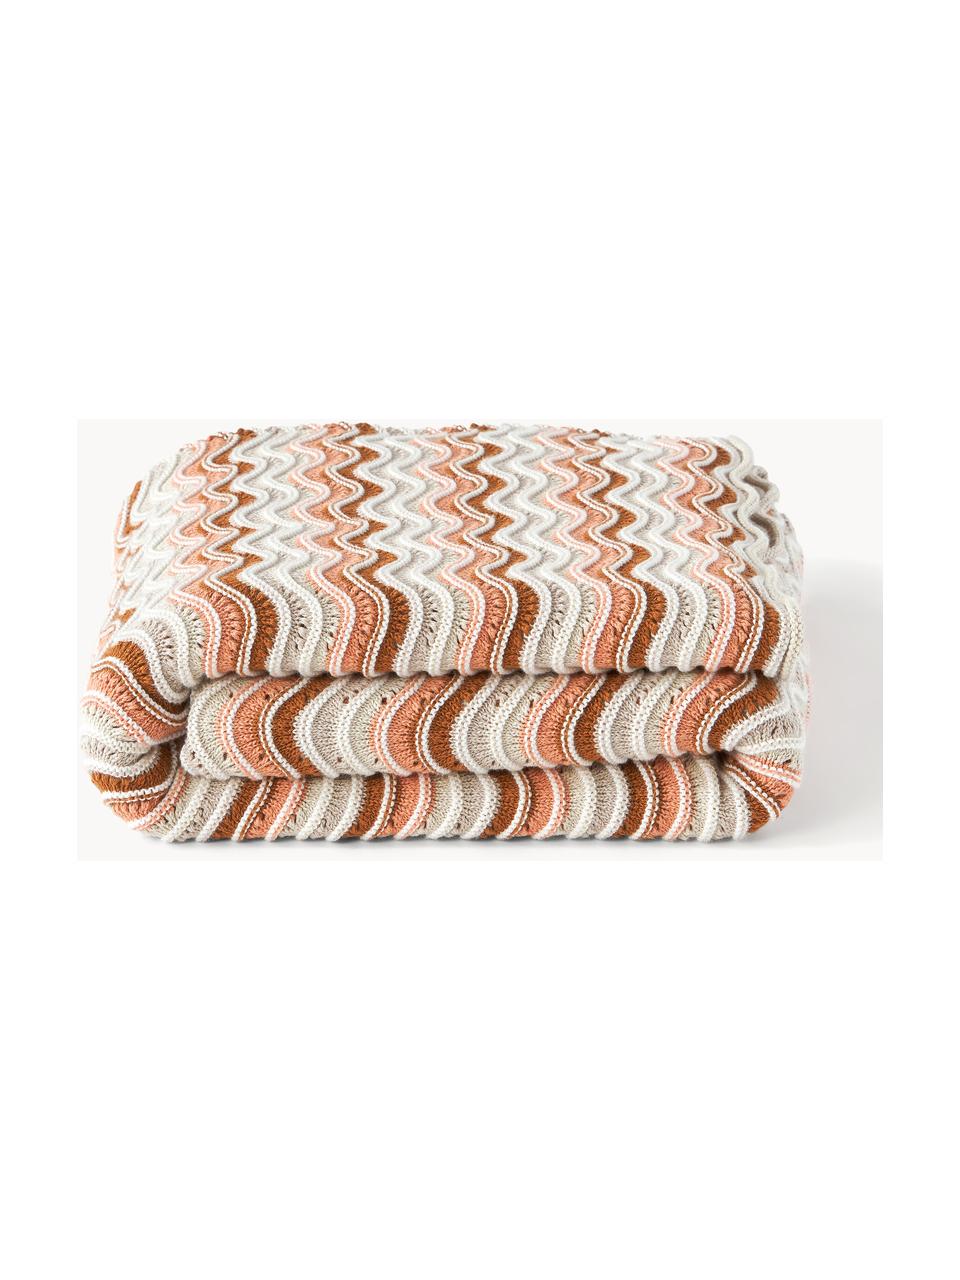 Coperta in cotone a maglia Emilio, 100% cotone, Beige, terracotta, salmone, Larg. 130 x Lung. 170 cm